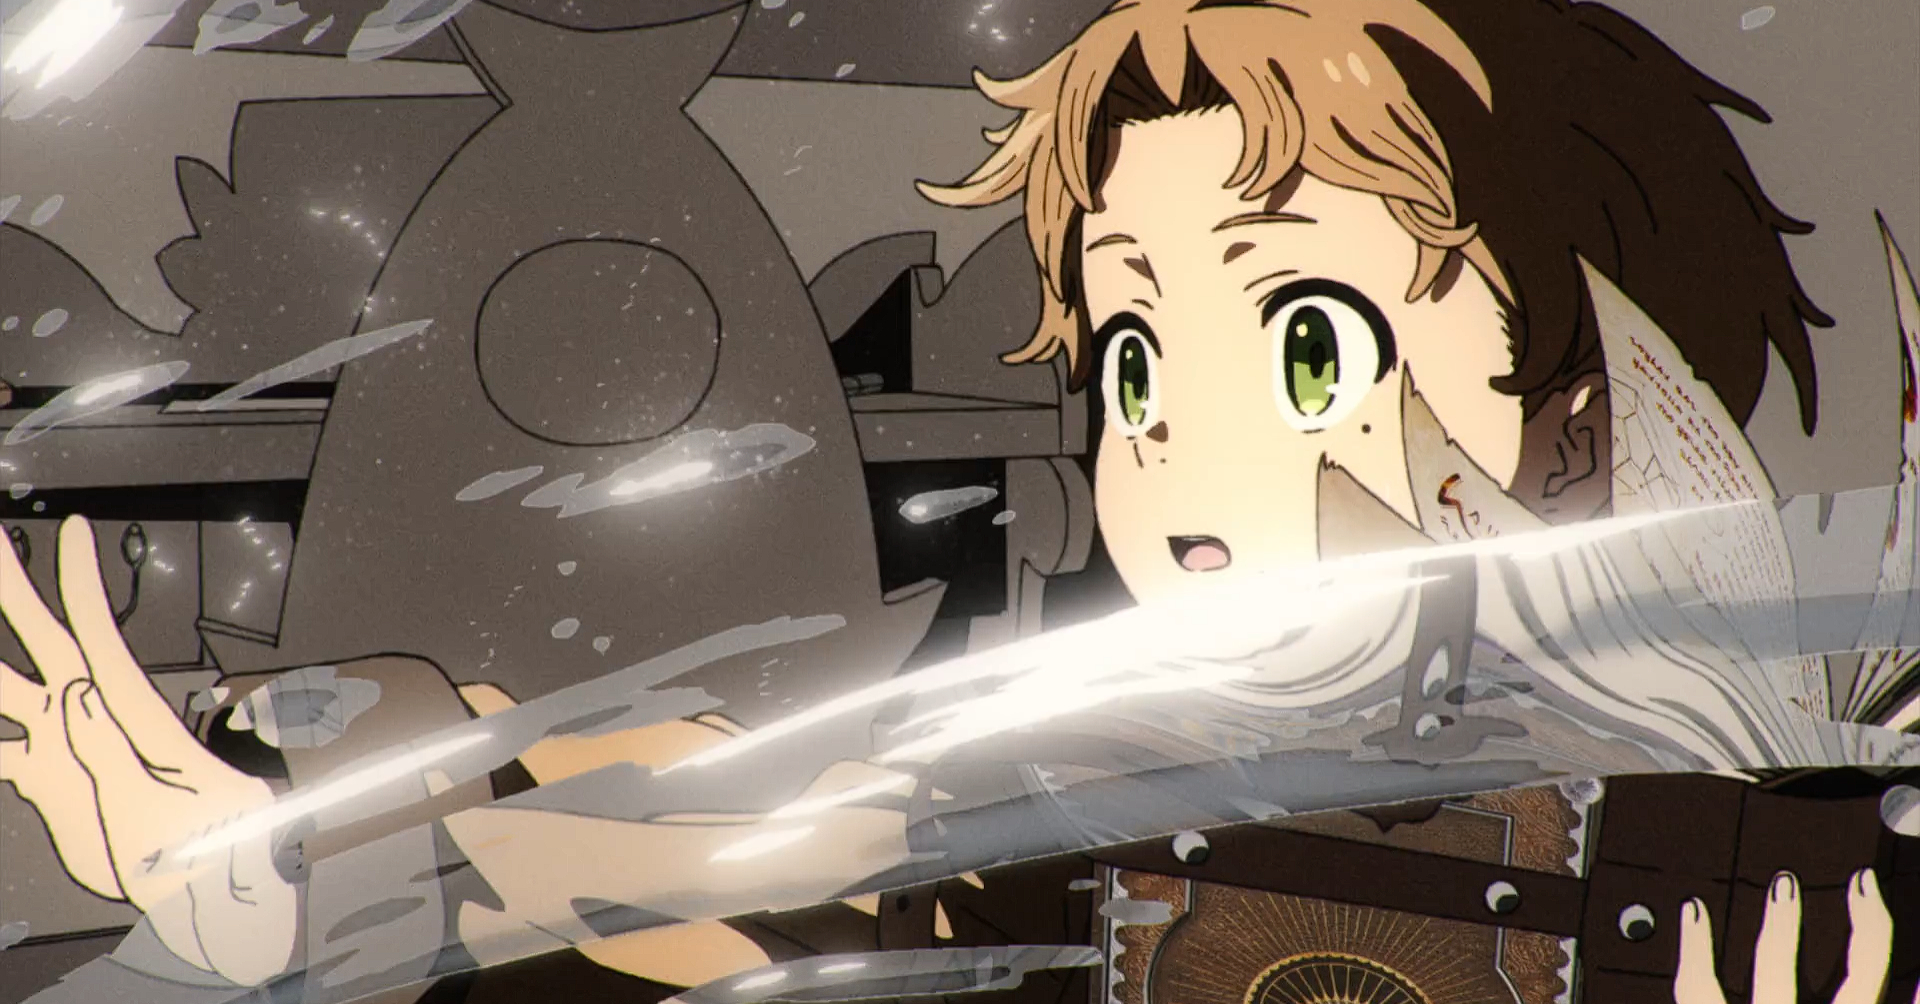 Mushoku Tensei Episode 1 Delivers Beautiful Animation - Anime Corner